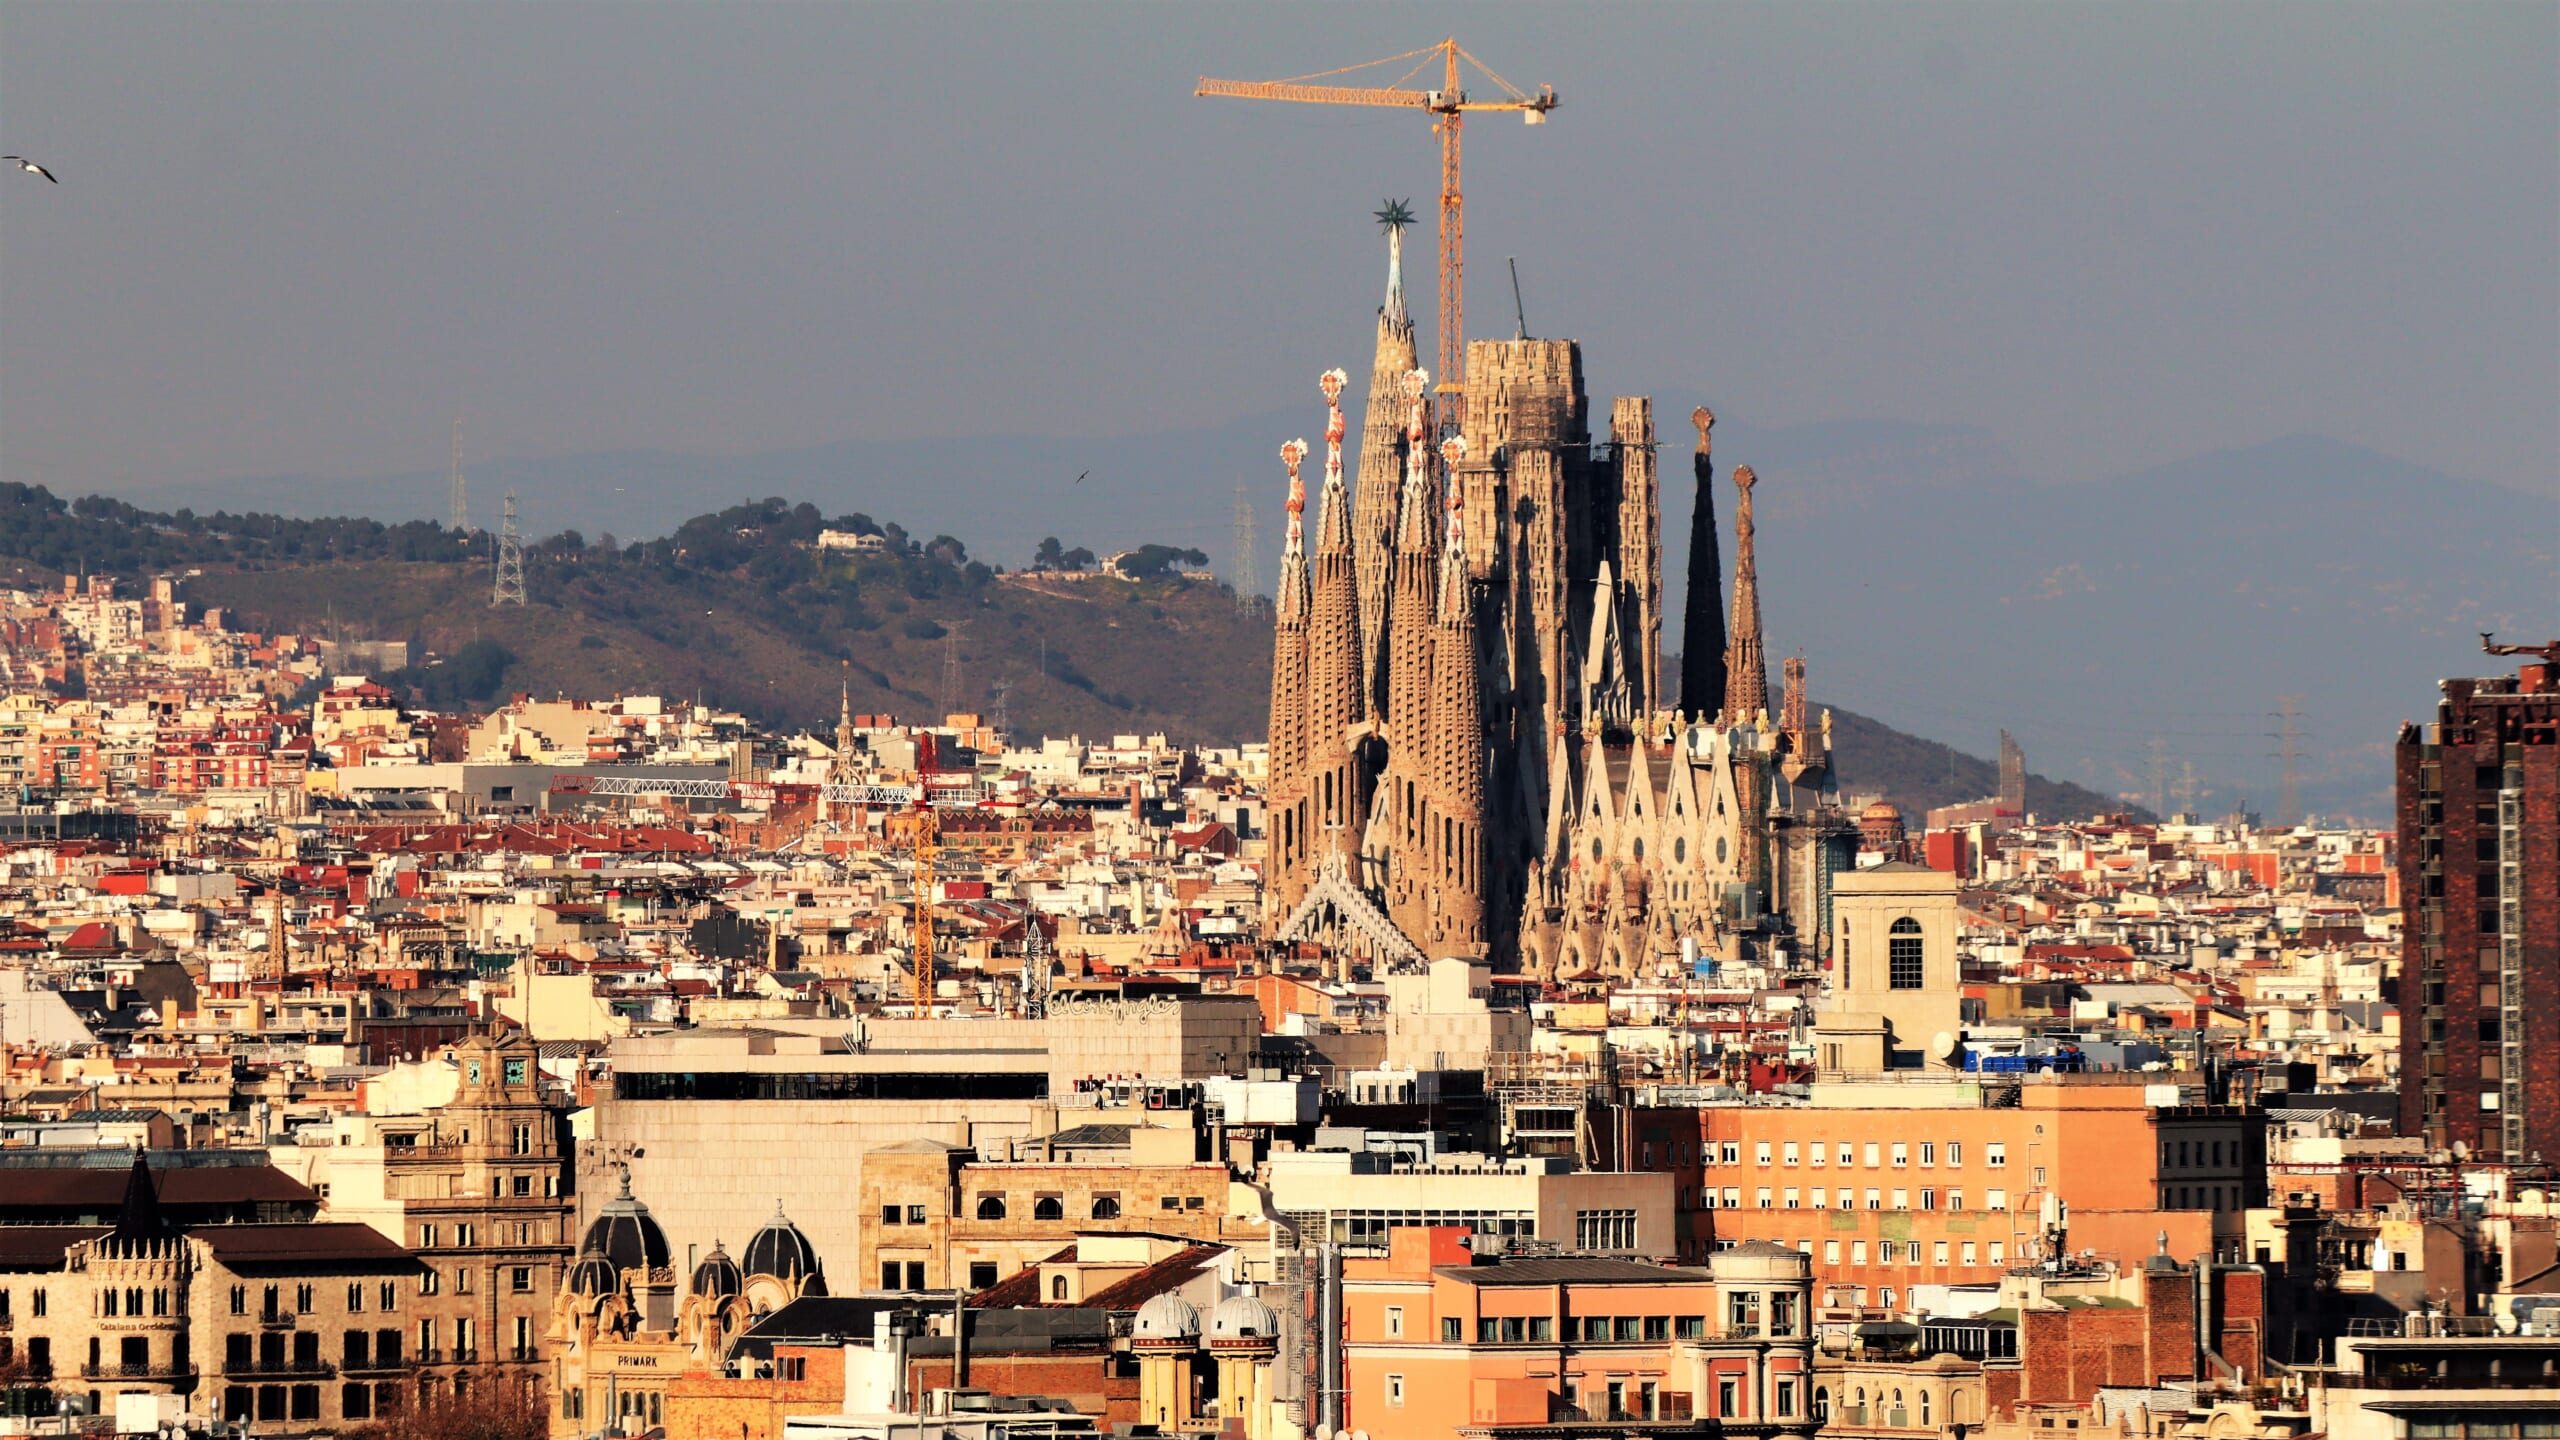 Sagrada Família, Image by Guy from Pixabay